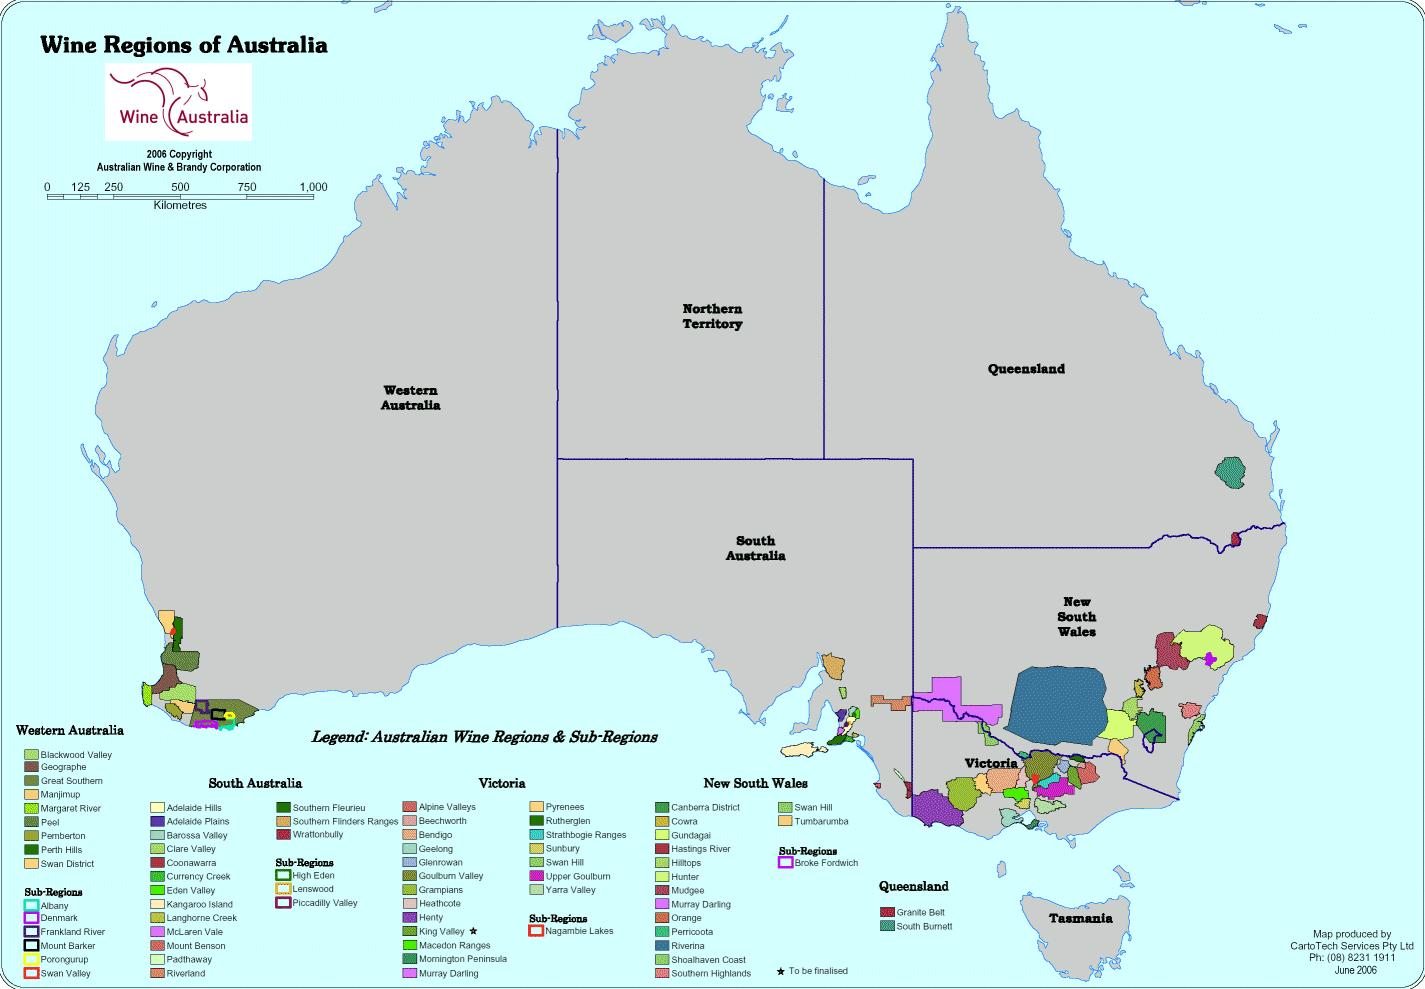 Australia wine: wine regions and vineyards of Australia